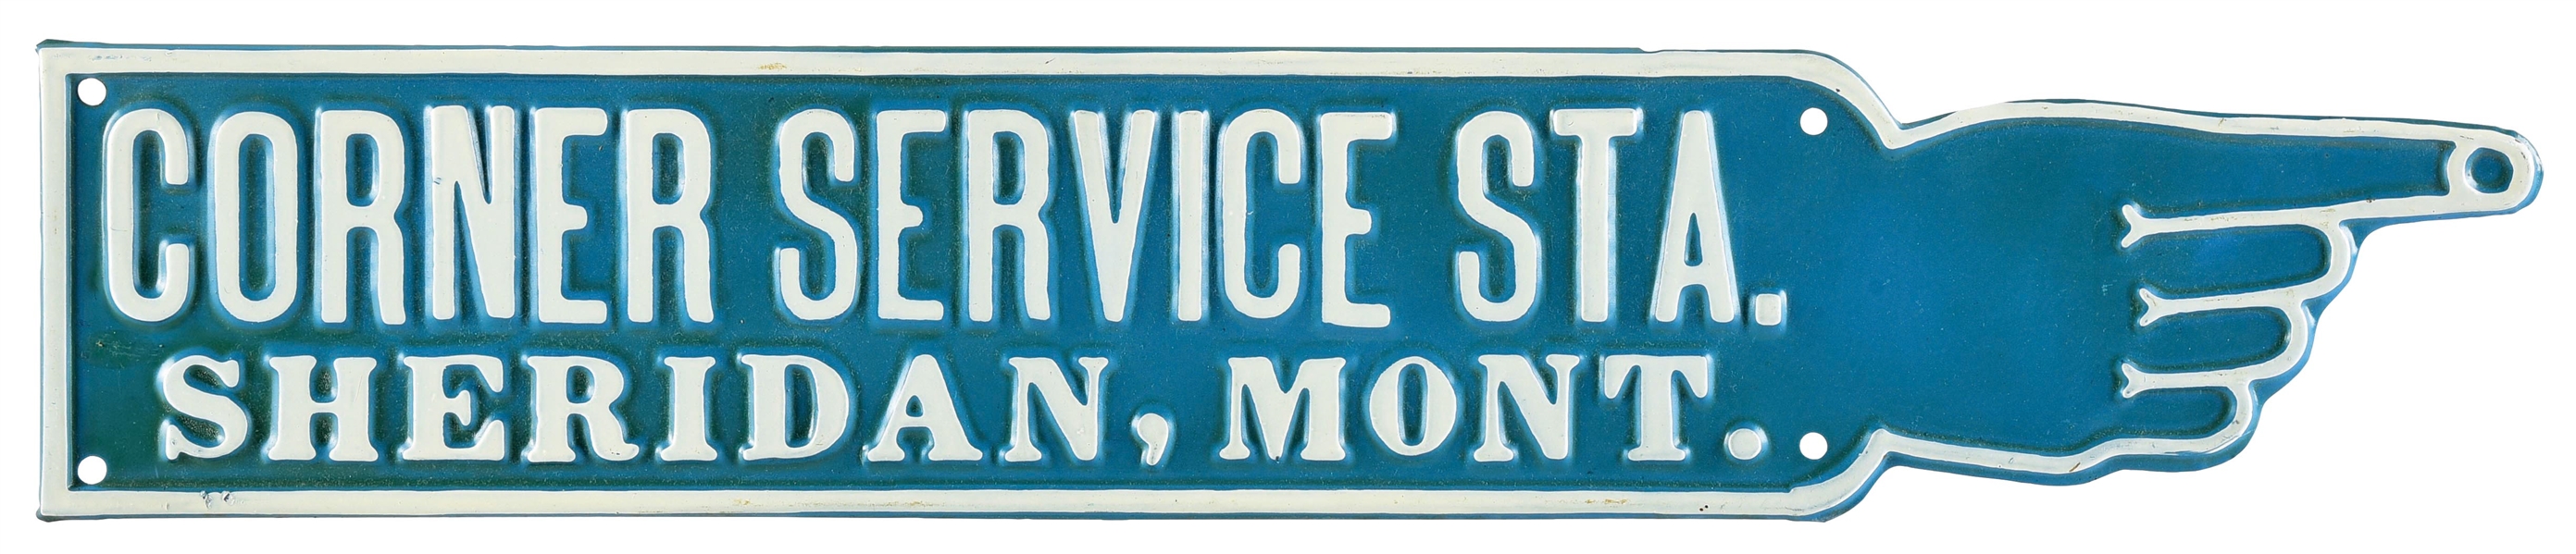 CORNER SERVICE STATION SHERIDAN MONTANA EMBOSSED TIN FINGER POINTER SIGN.